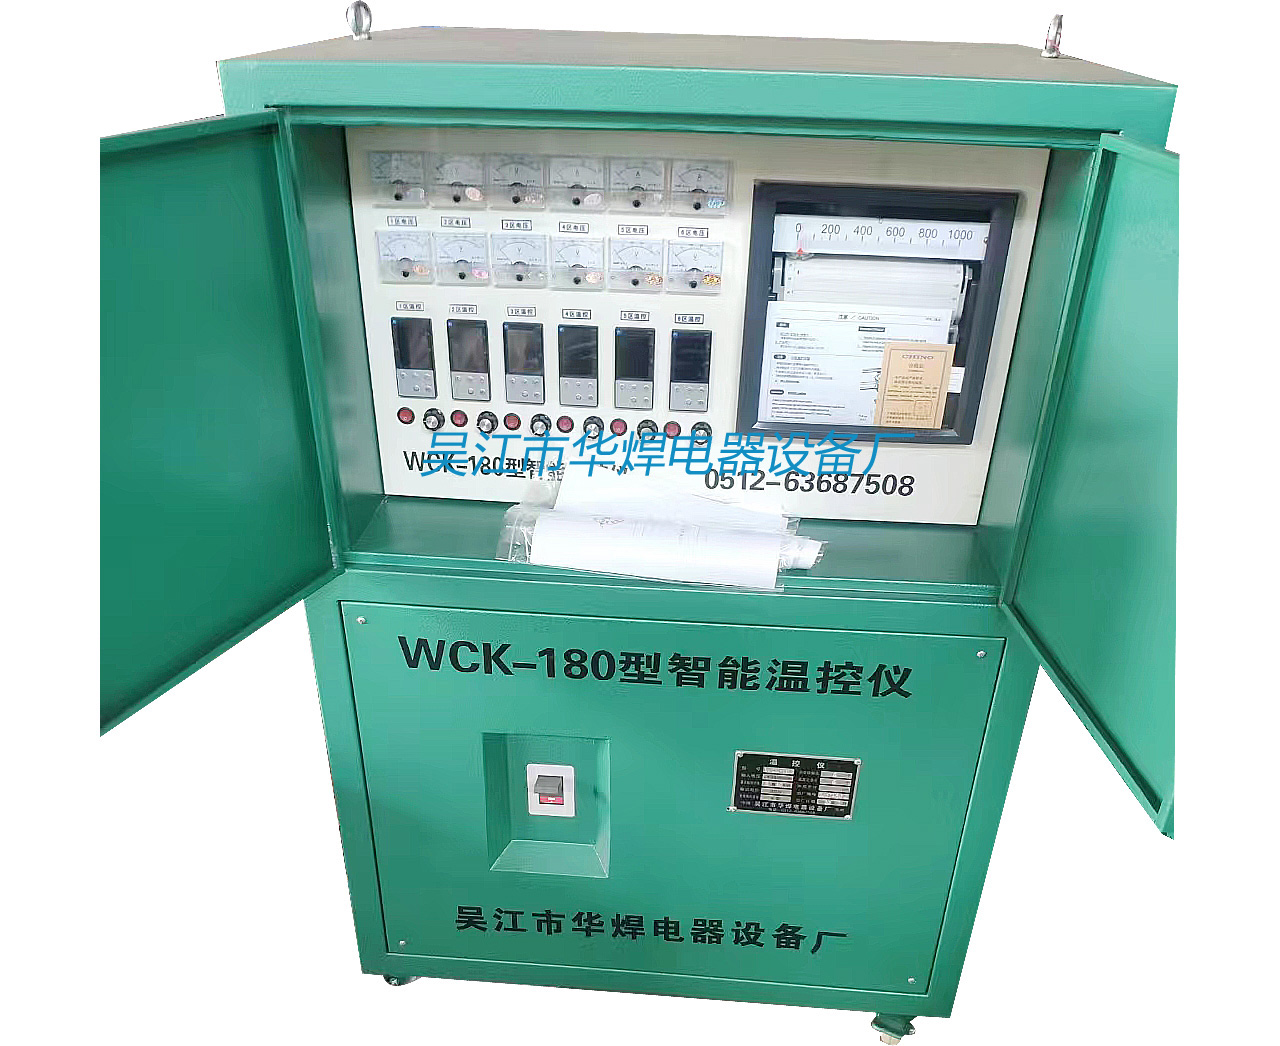 WCK-180型智能温控仪